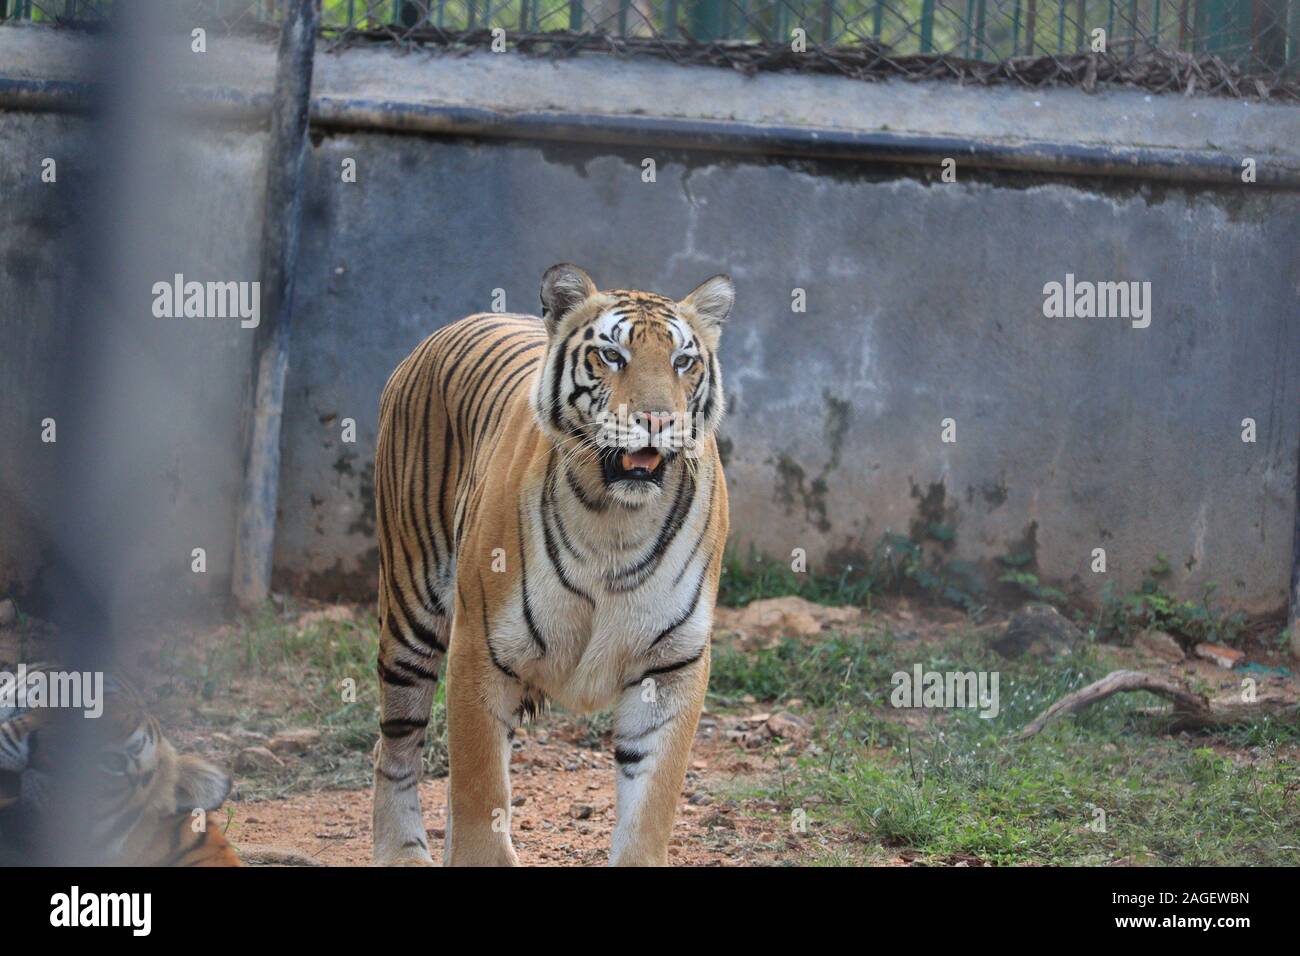 Tamilnadu wildlife hi-res stock photography and images - Alamy